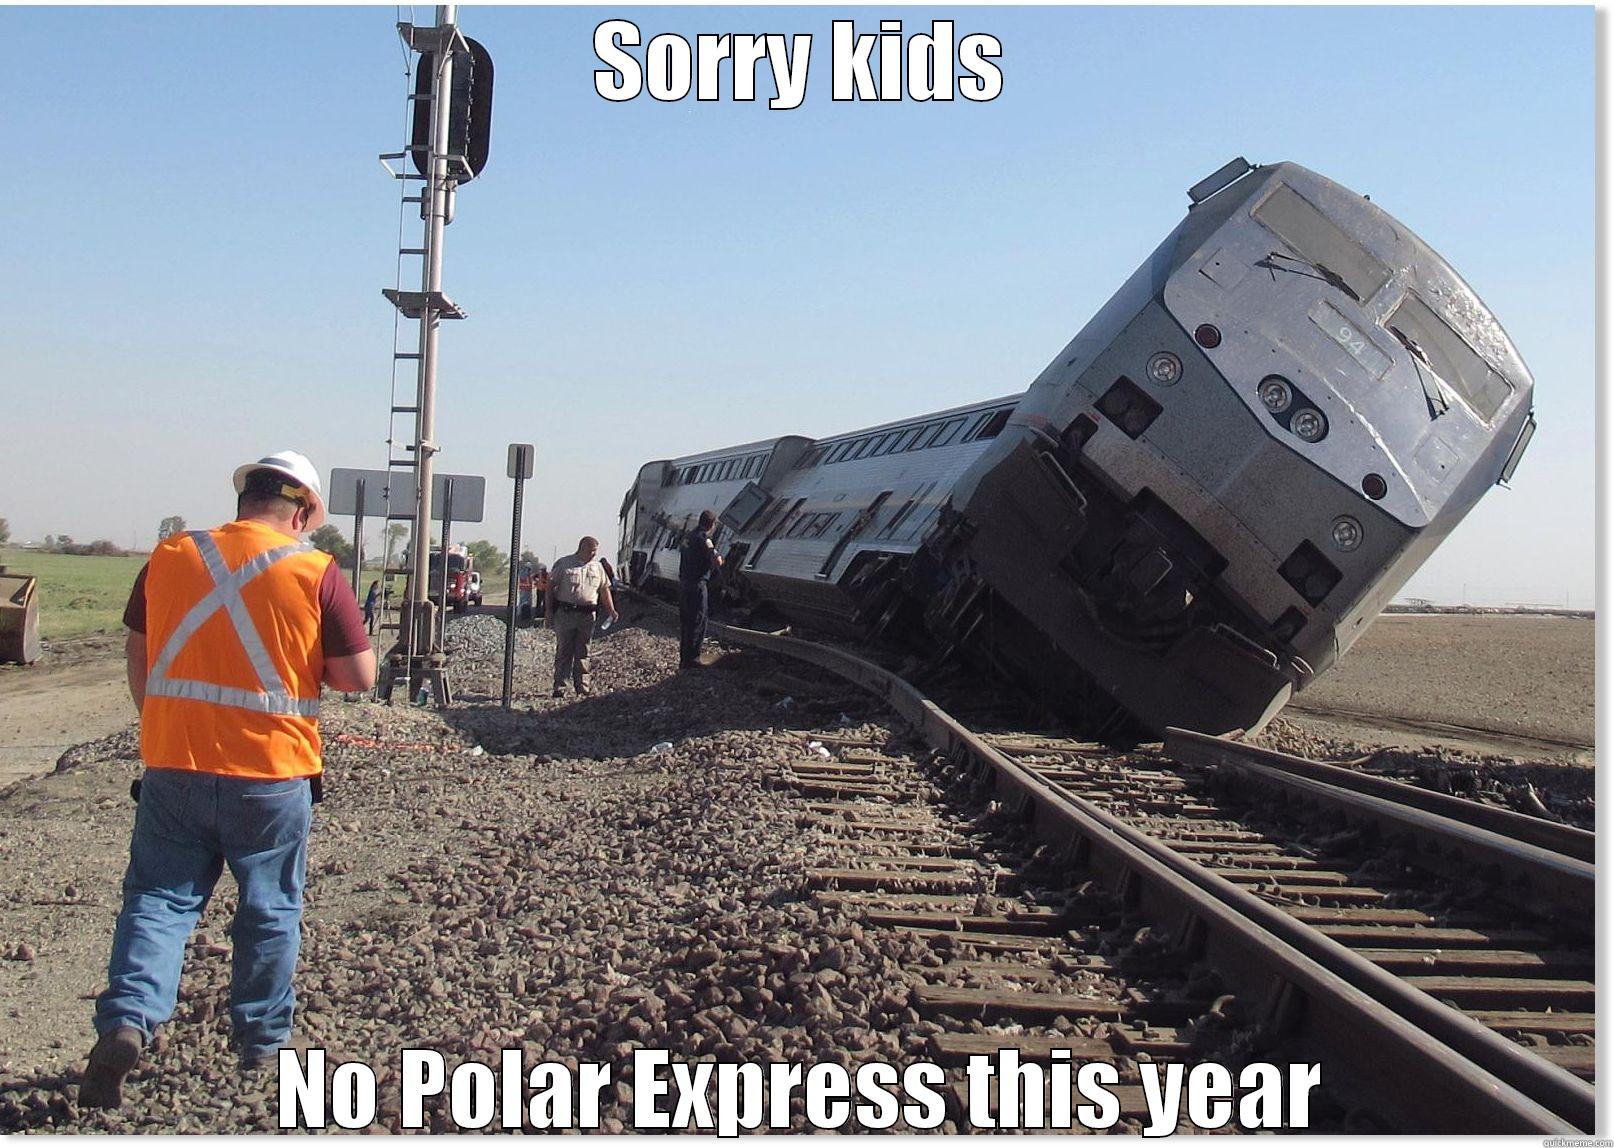 Polar express - SORRY KIDS NO POLAR EXPRESS THIS YEAR Misc